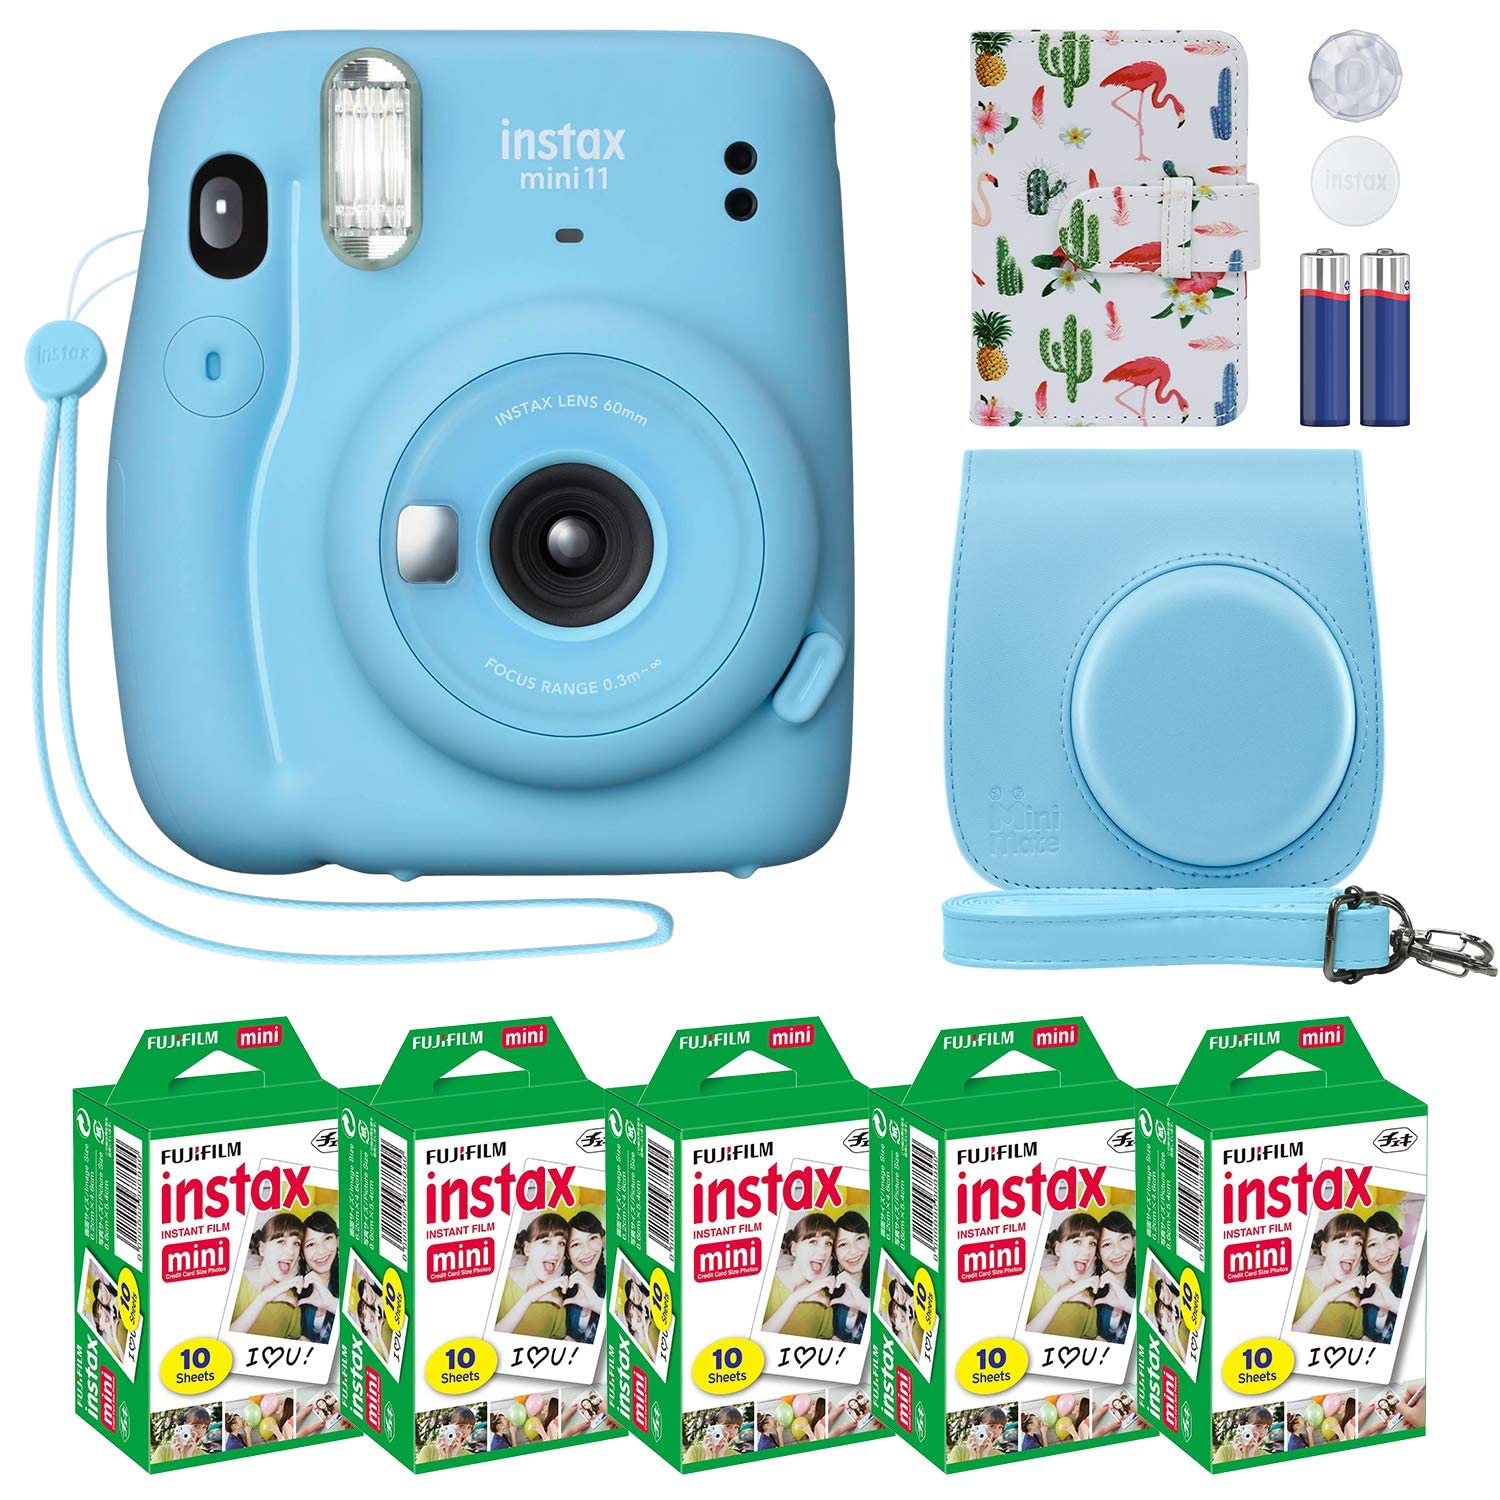 Fujifilm Instax Mini 11 Instant Camera Sky Blue + Custom Case Fuji Film Value Pack (50 Sheets) Flamingo Designer Photo Album for instax Photos